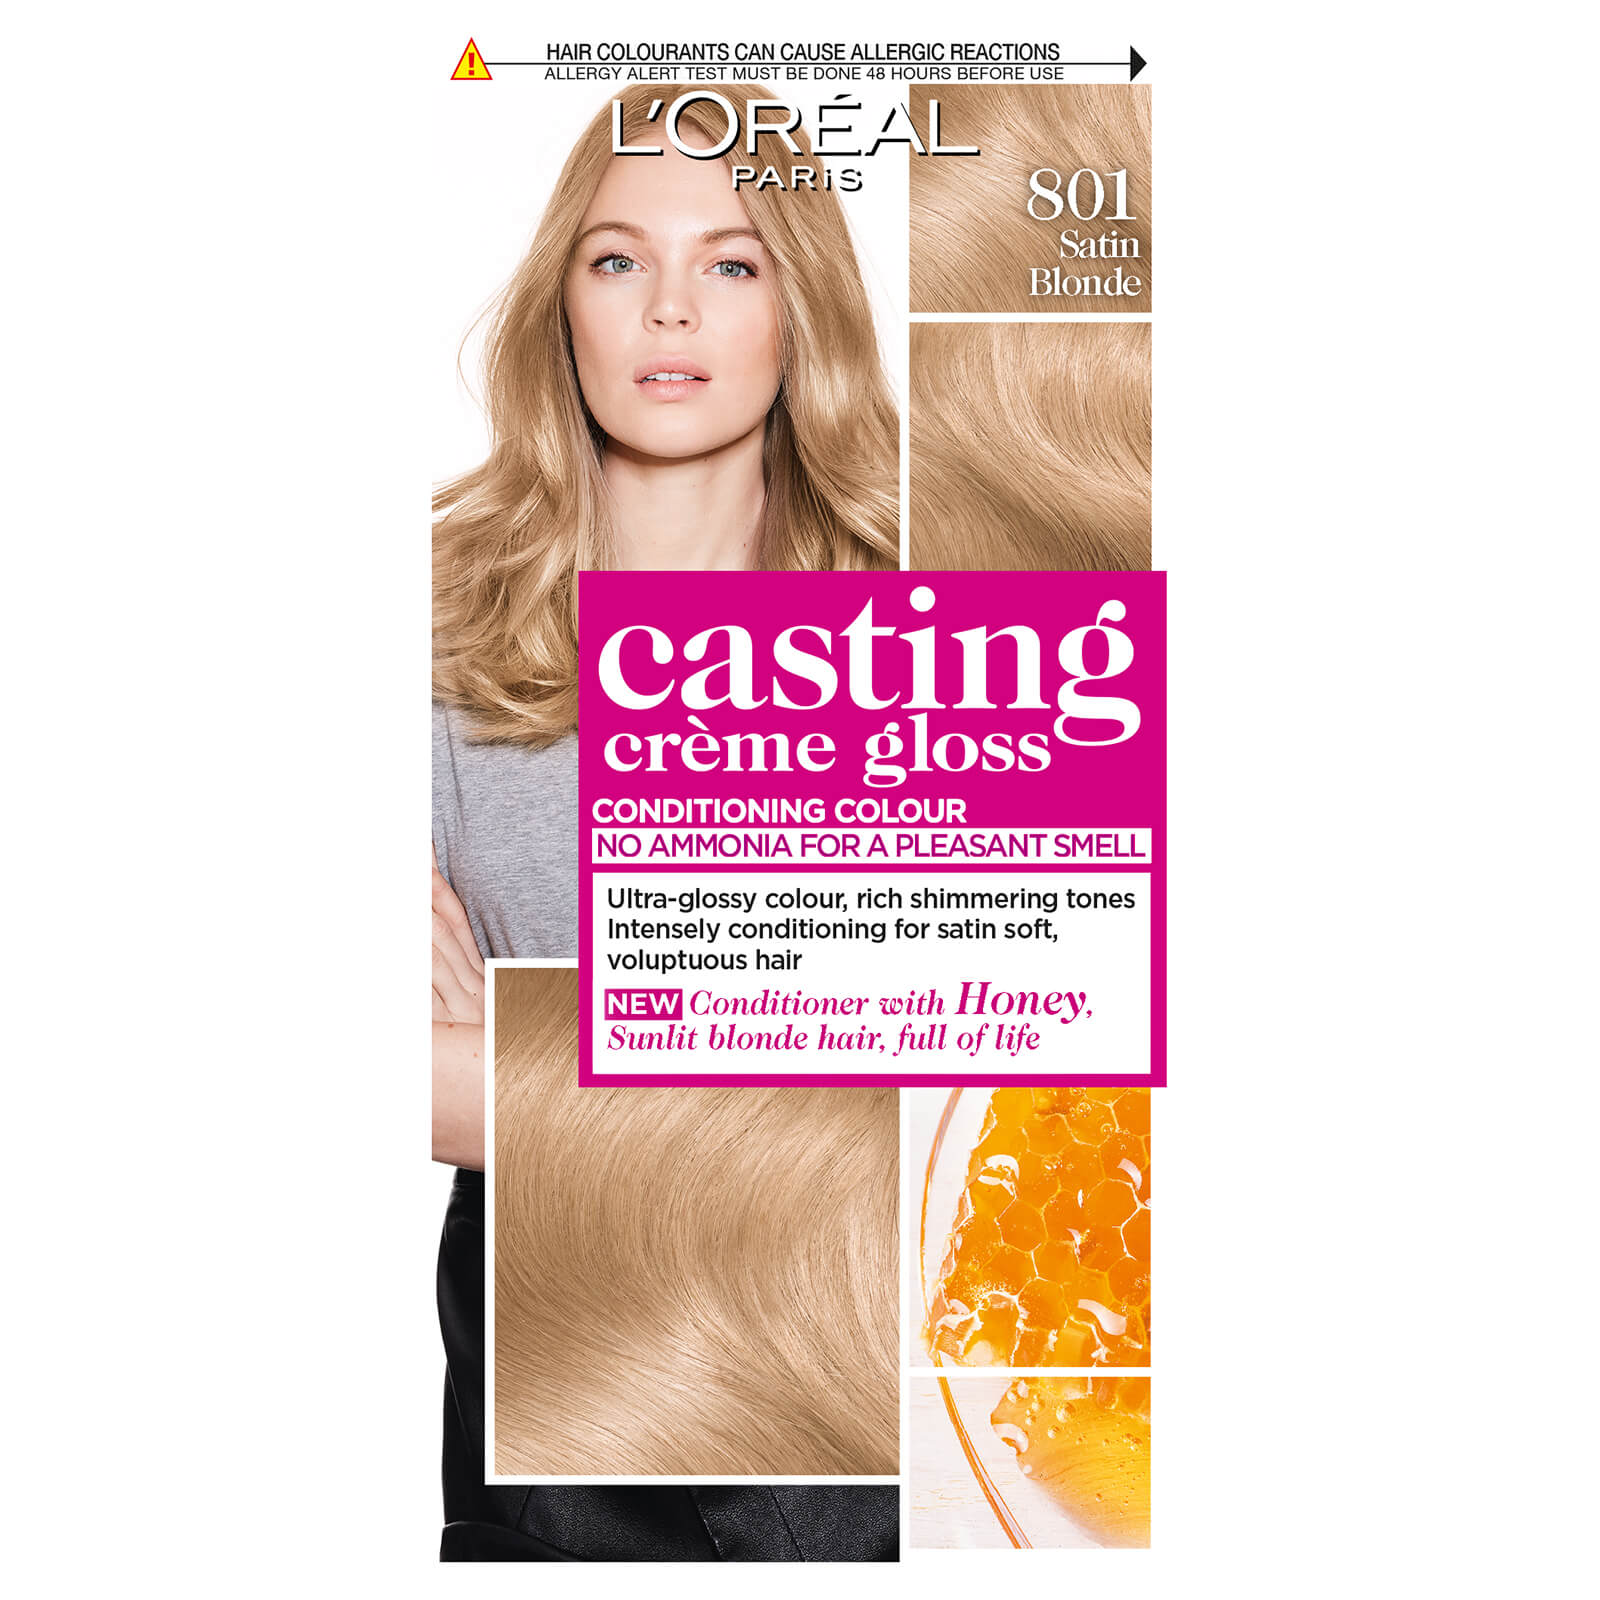 L'Oréal Paris Casting Crème Gloss Semi-Permanent Hair Dye (Various Shades) - 801 Satin Blonde